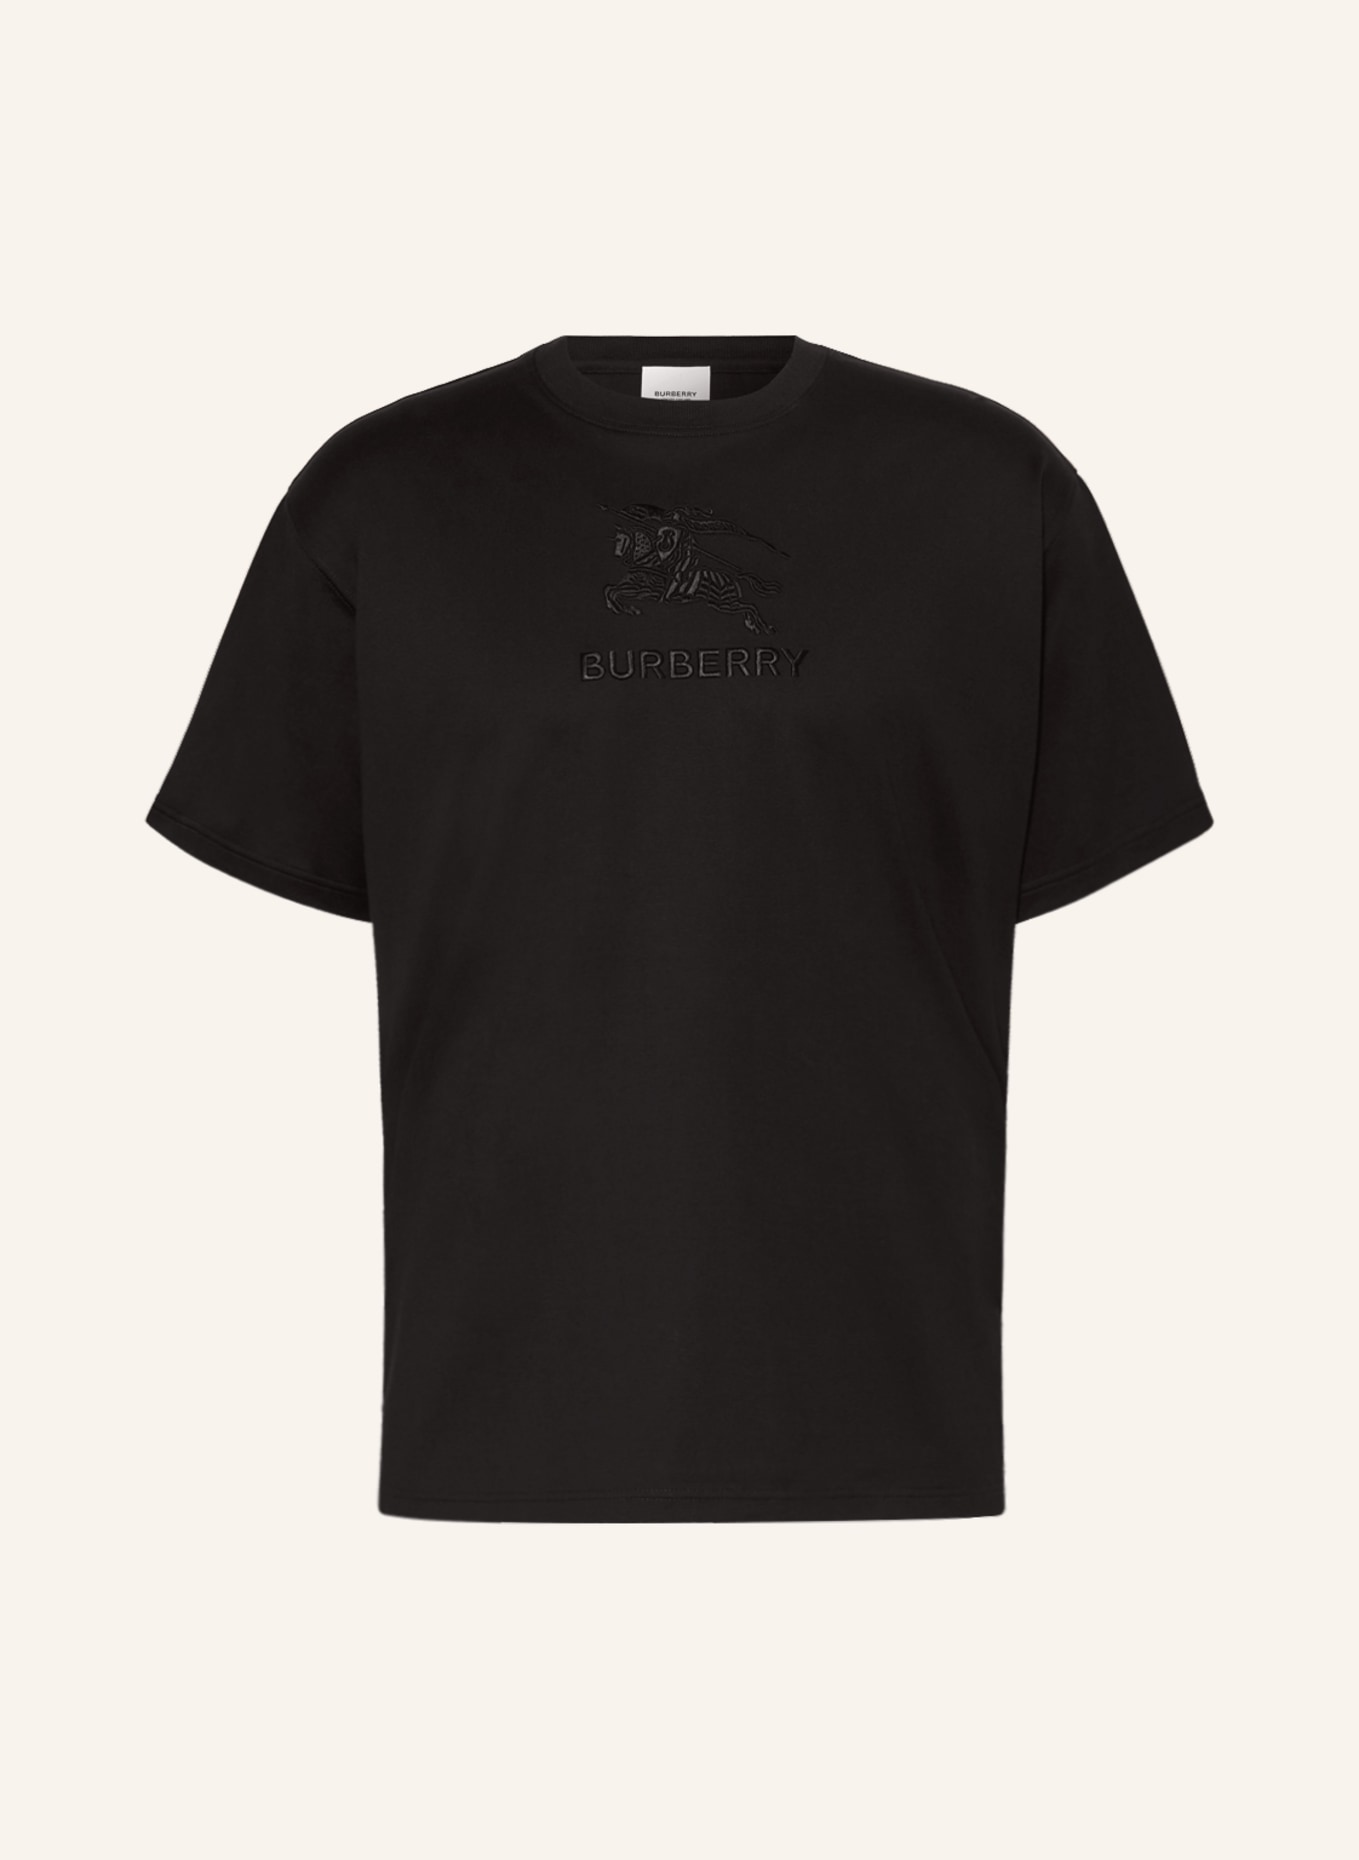 BURBERRY T-Shirt TEMPAH, Farbe: SCHWARZ (Bild 1)